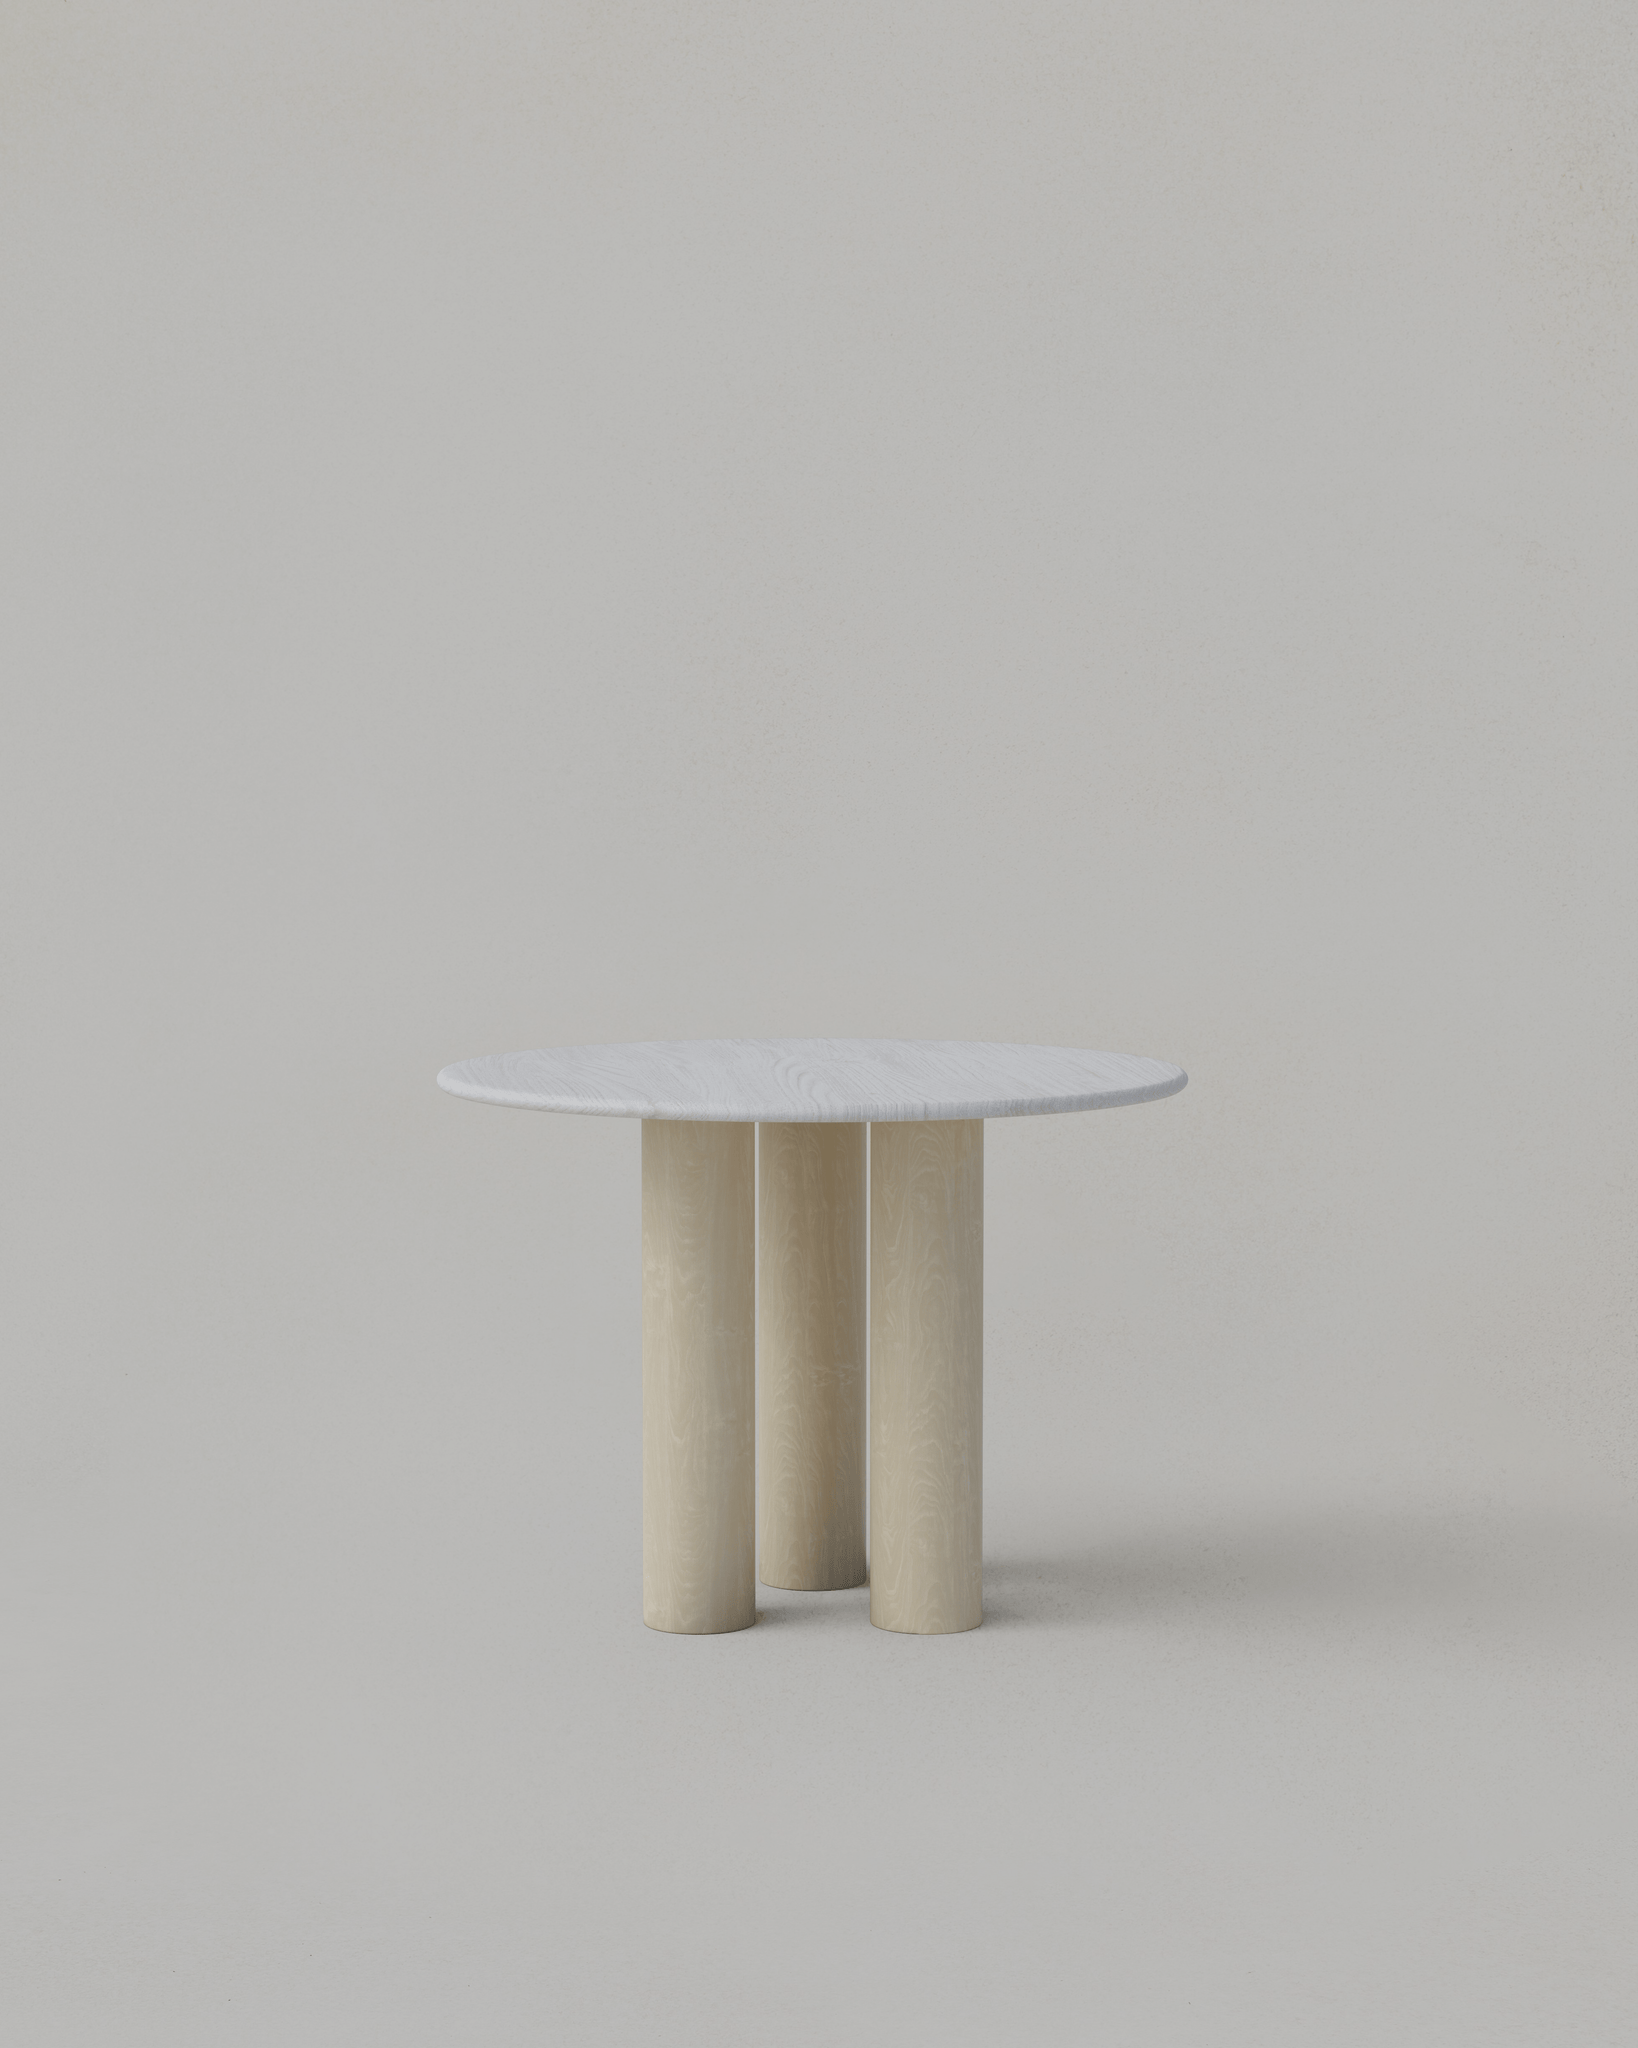 Three-Legged Round Table